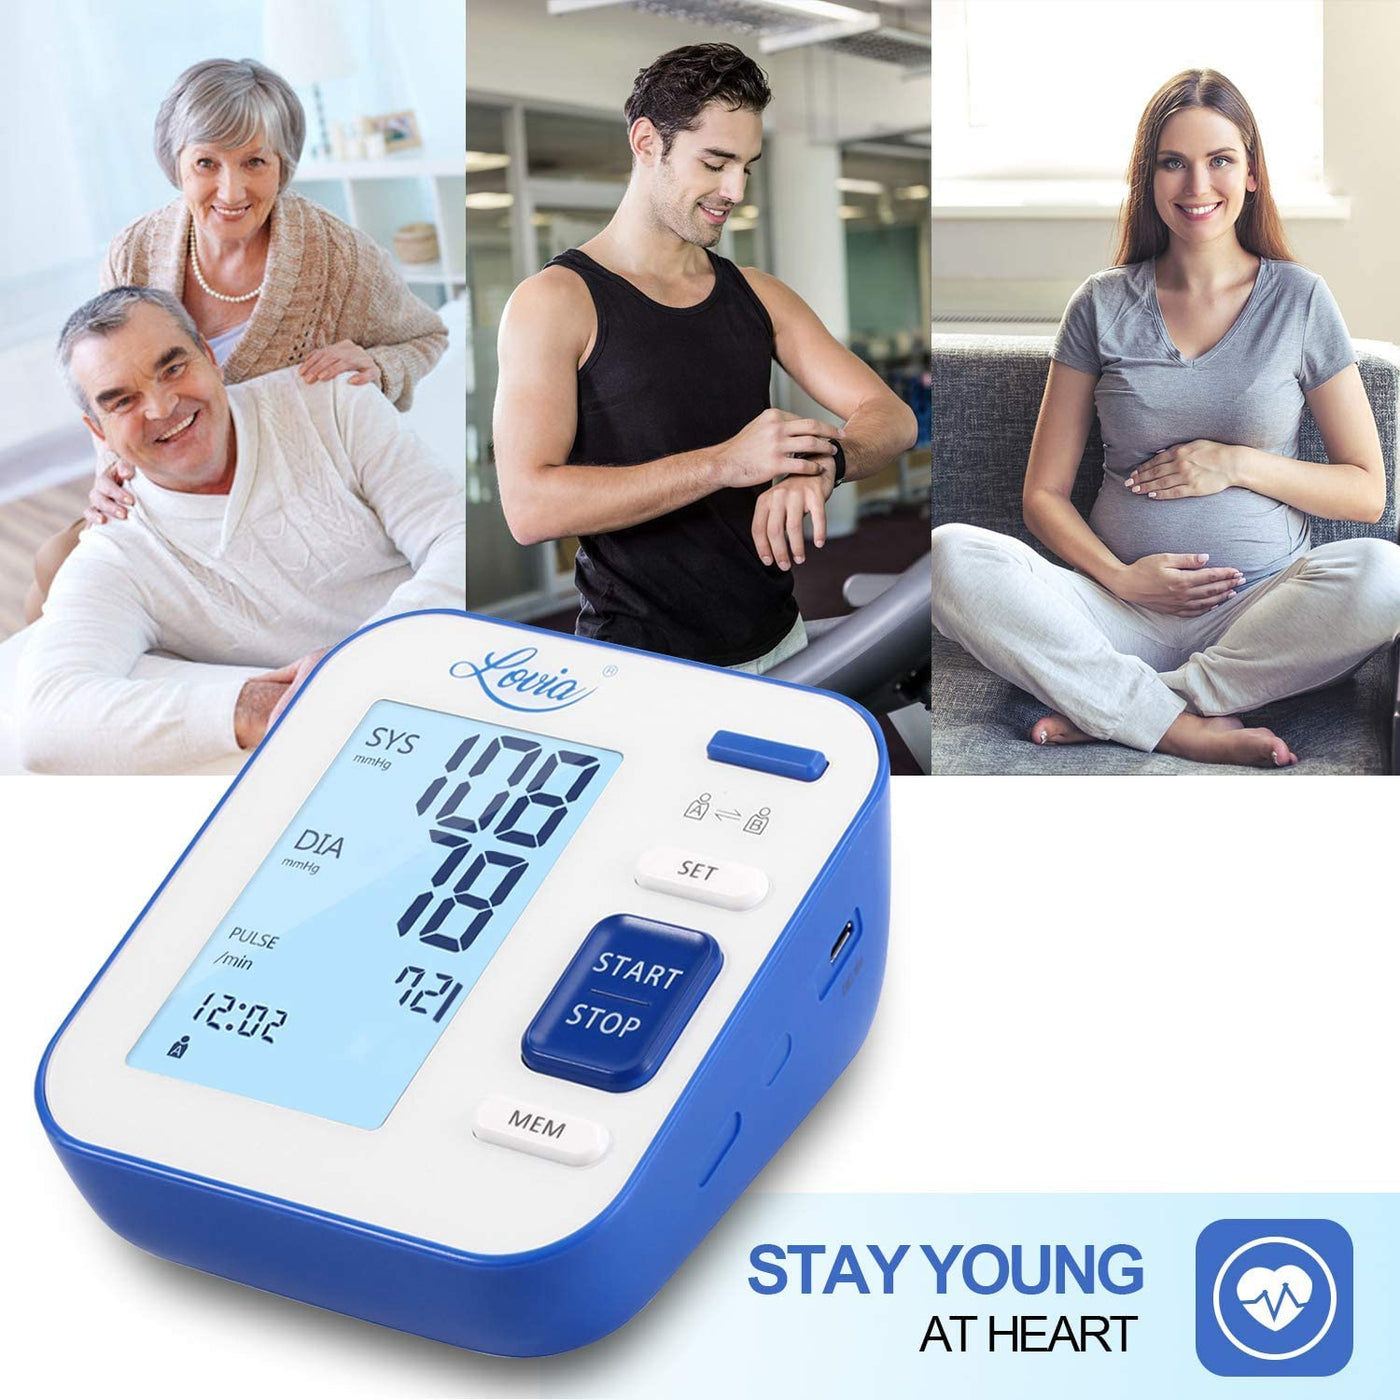 Blood Pressure Monitor, Lovia Automatic Digital Blood Pressure Monitor  Upper Arm